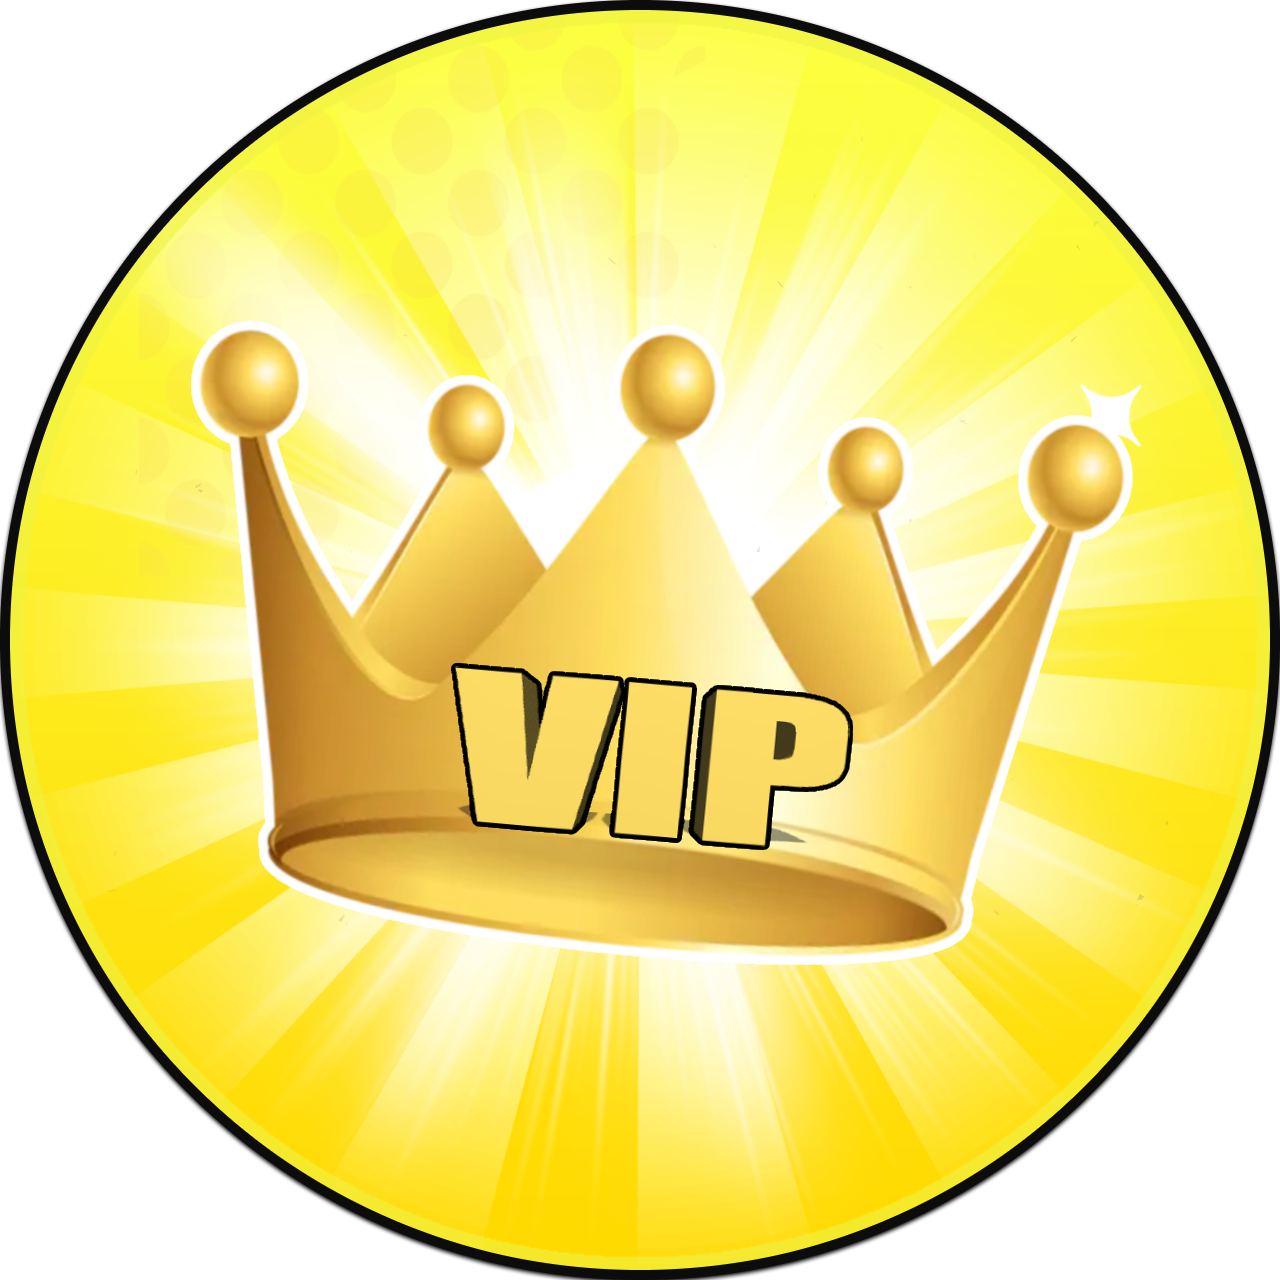 VIP Gamepass by ImperfectIyPerfect on DeviantArt